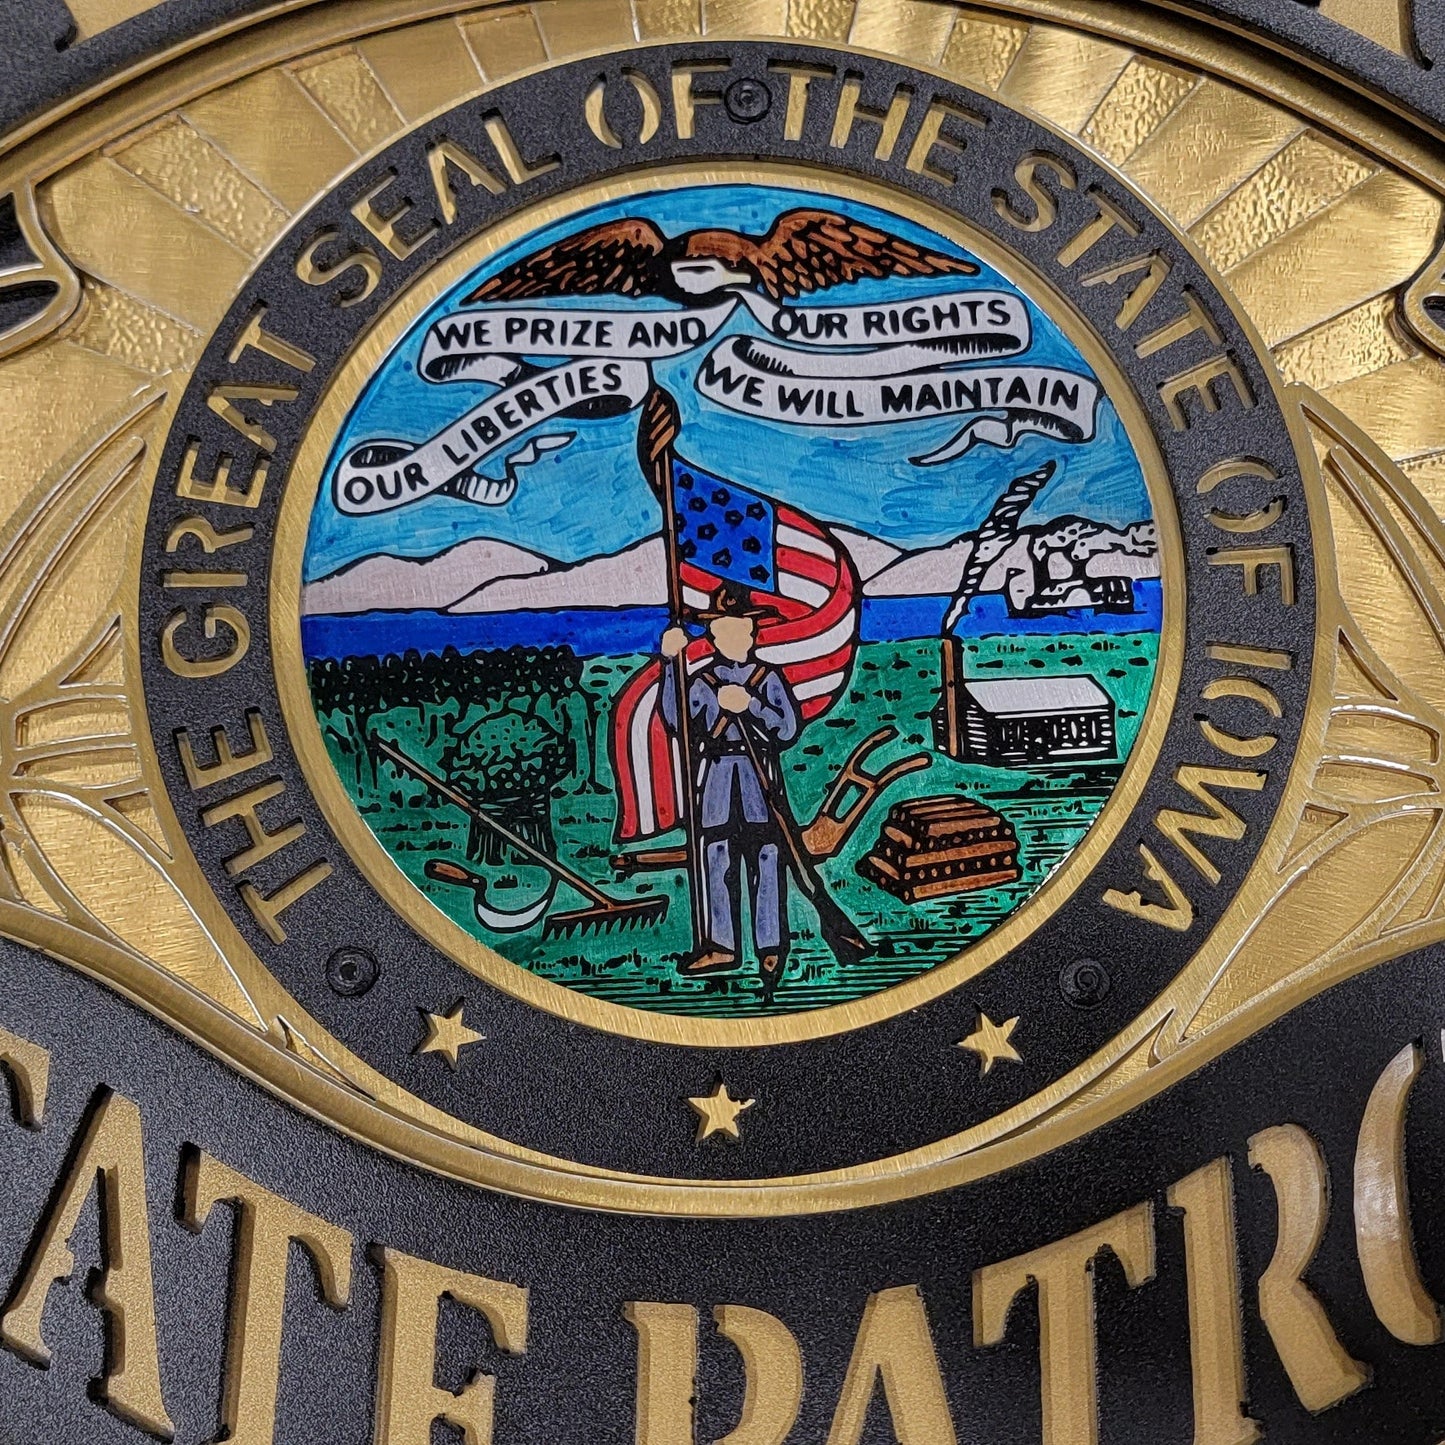 Drost Iowa State Patrol Badge